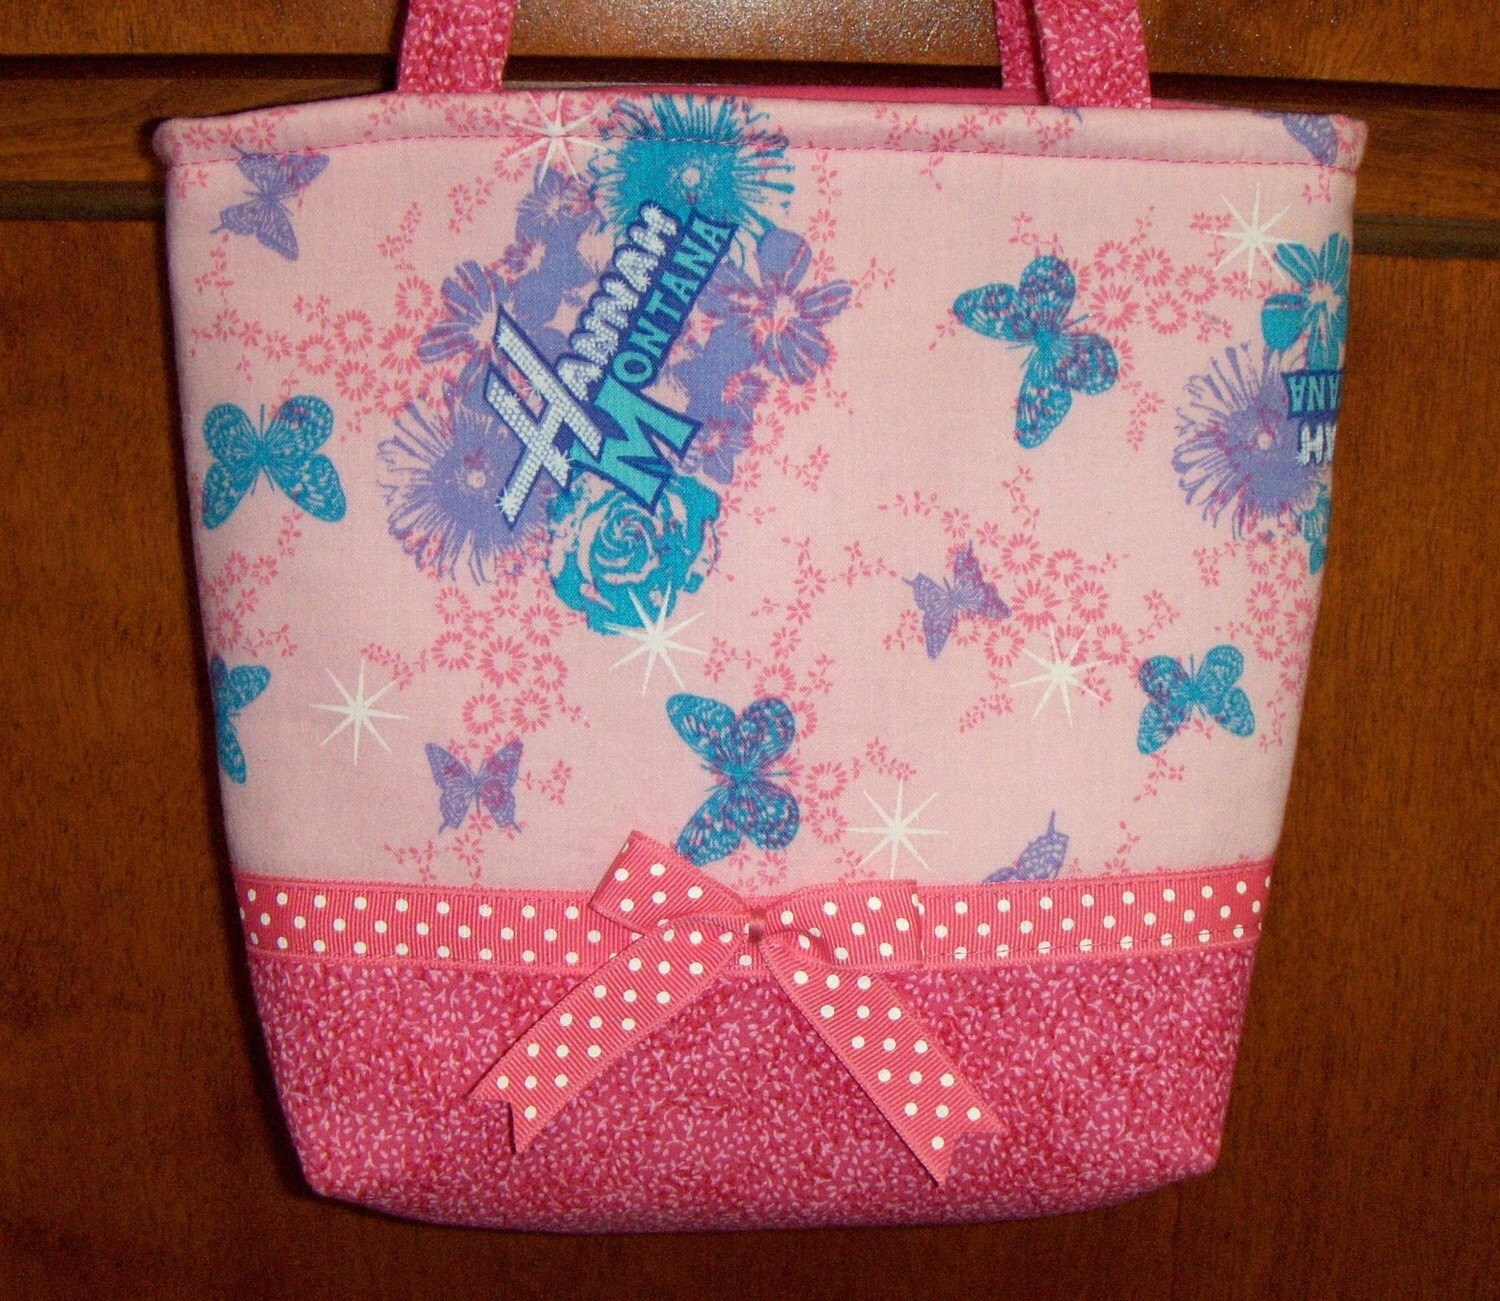 Little Girls Hannah Montana purse/tote bag handmade